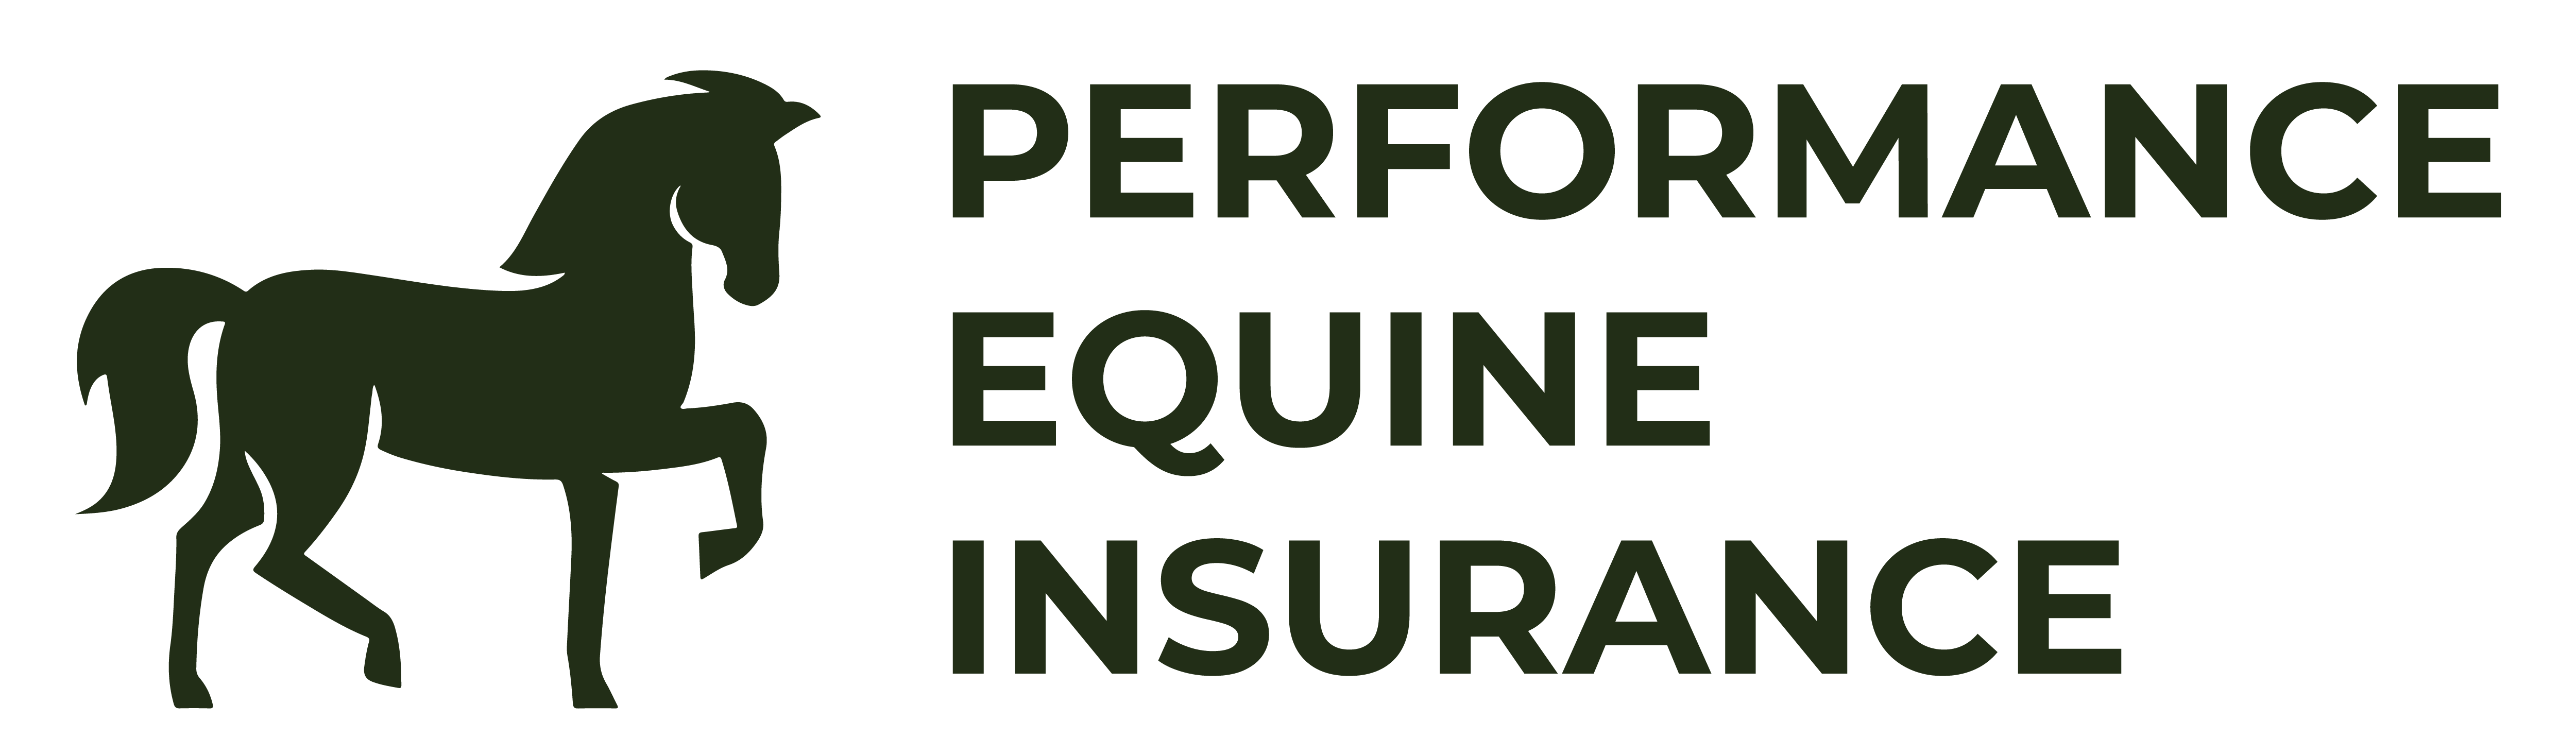 Performance Equine Insurance